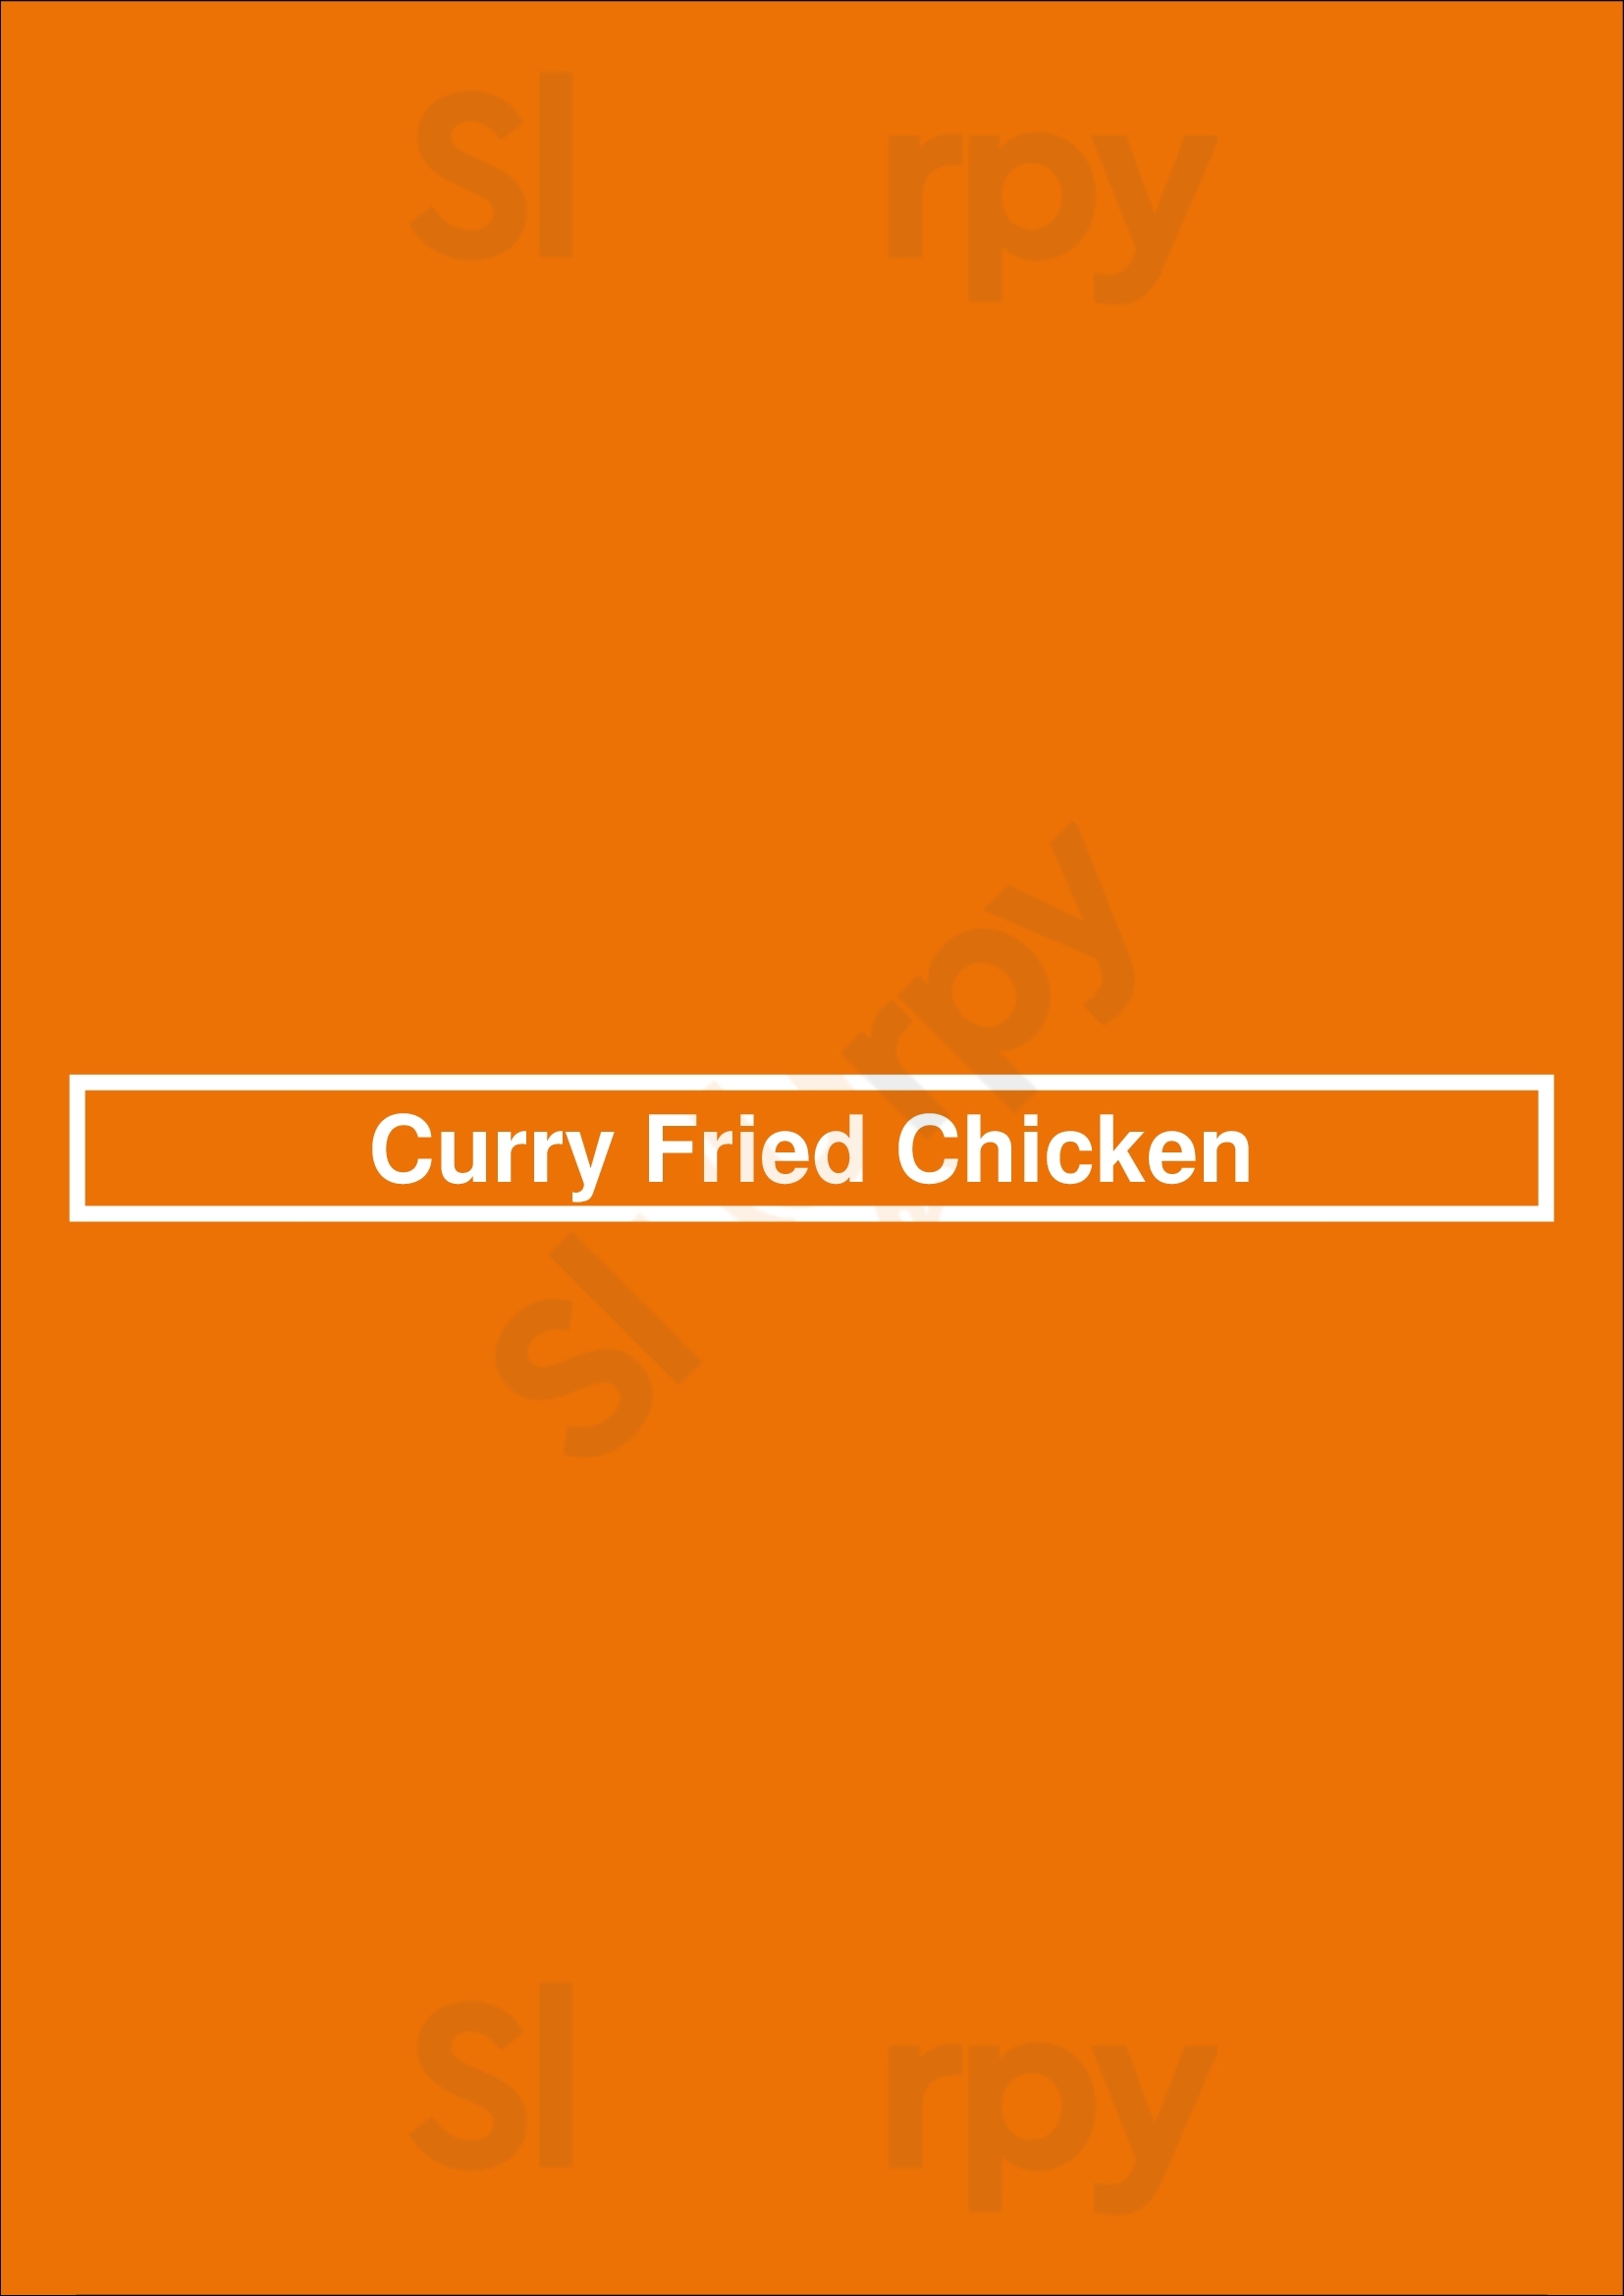 Curry Fried Chicken Salt Lake City Menu - 1